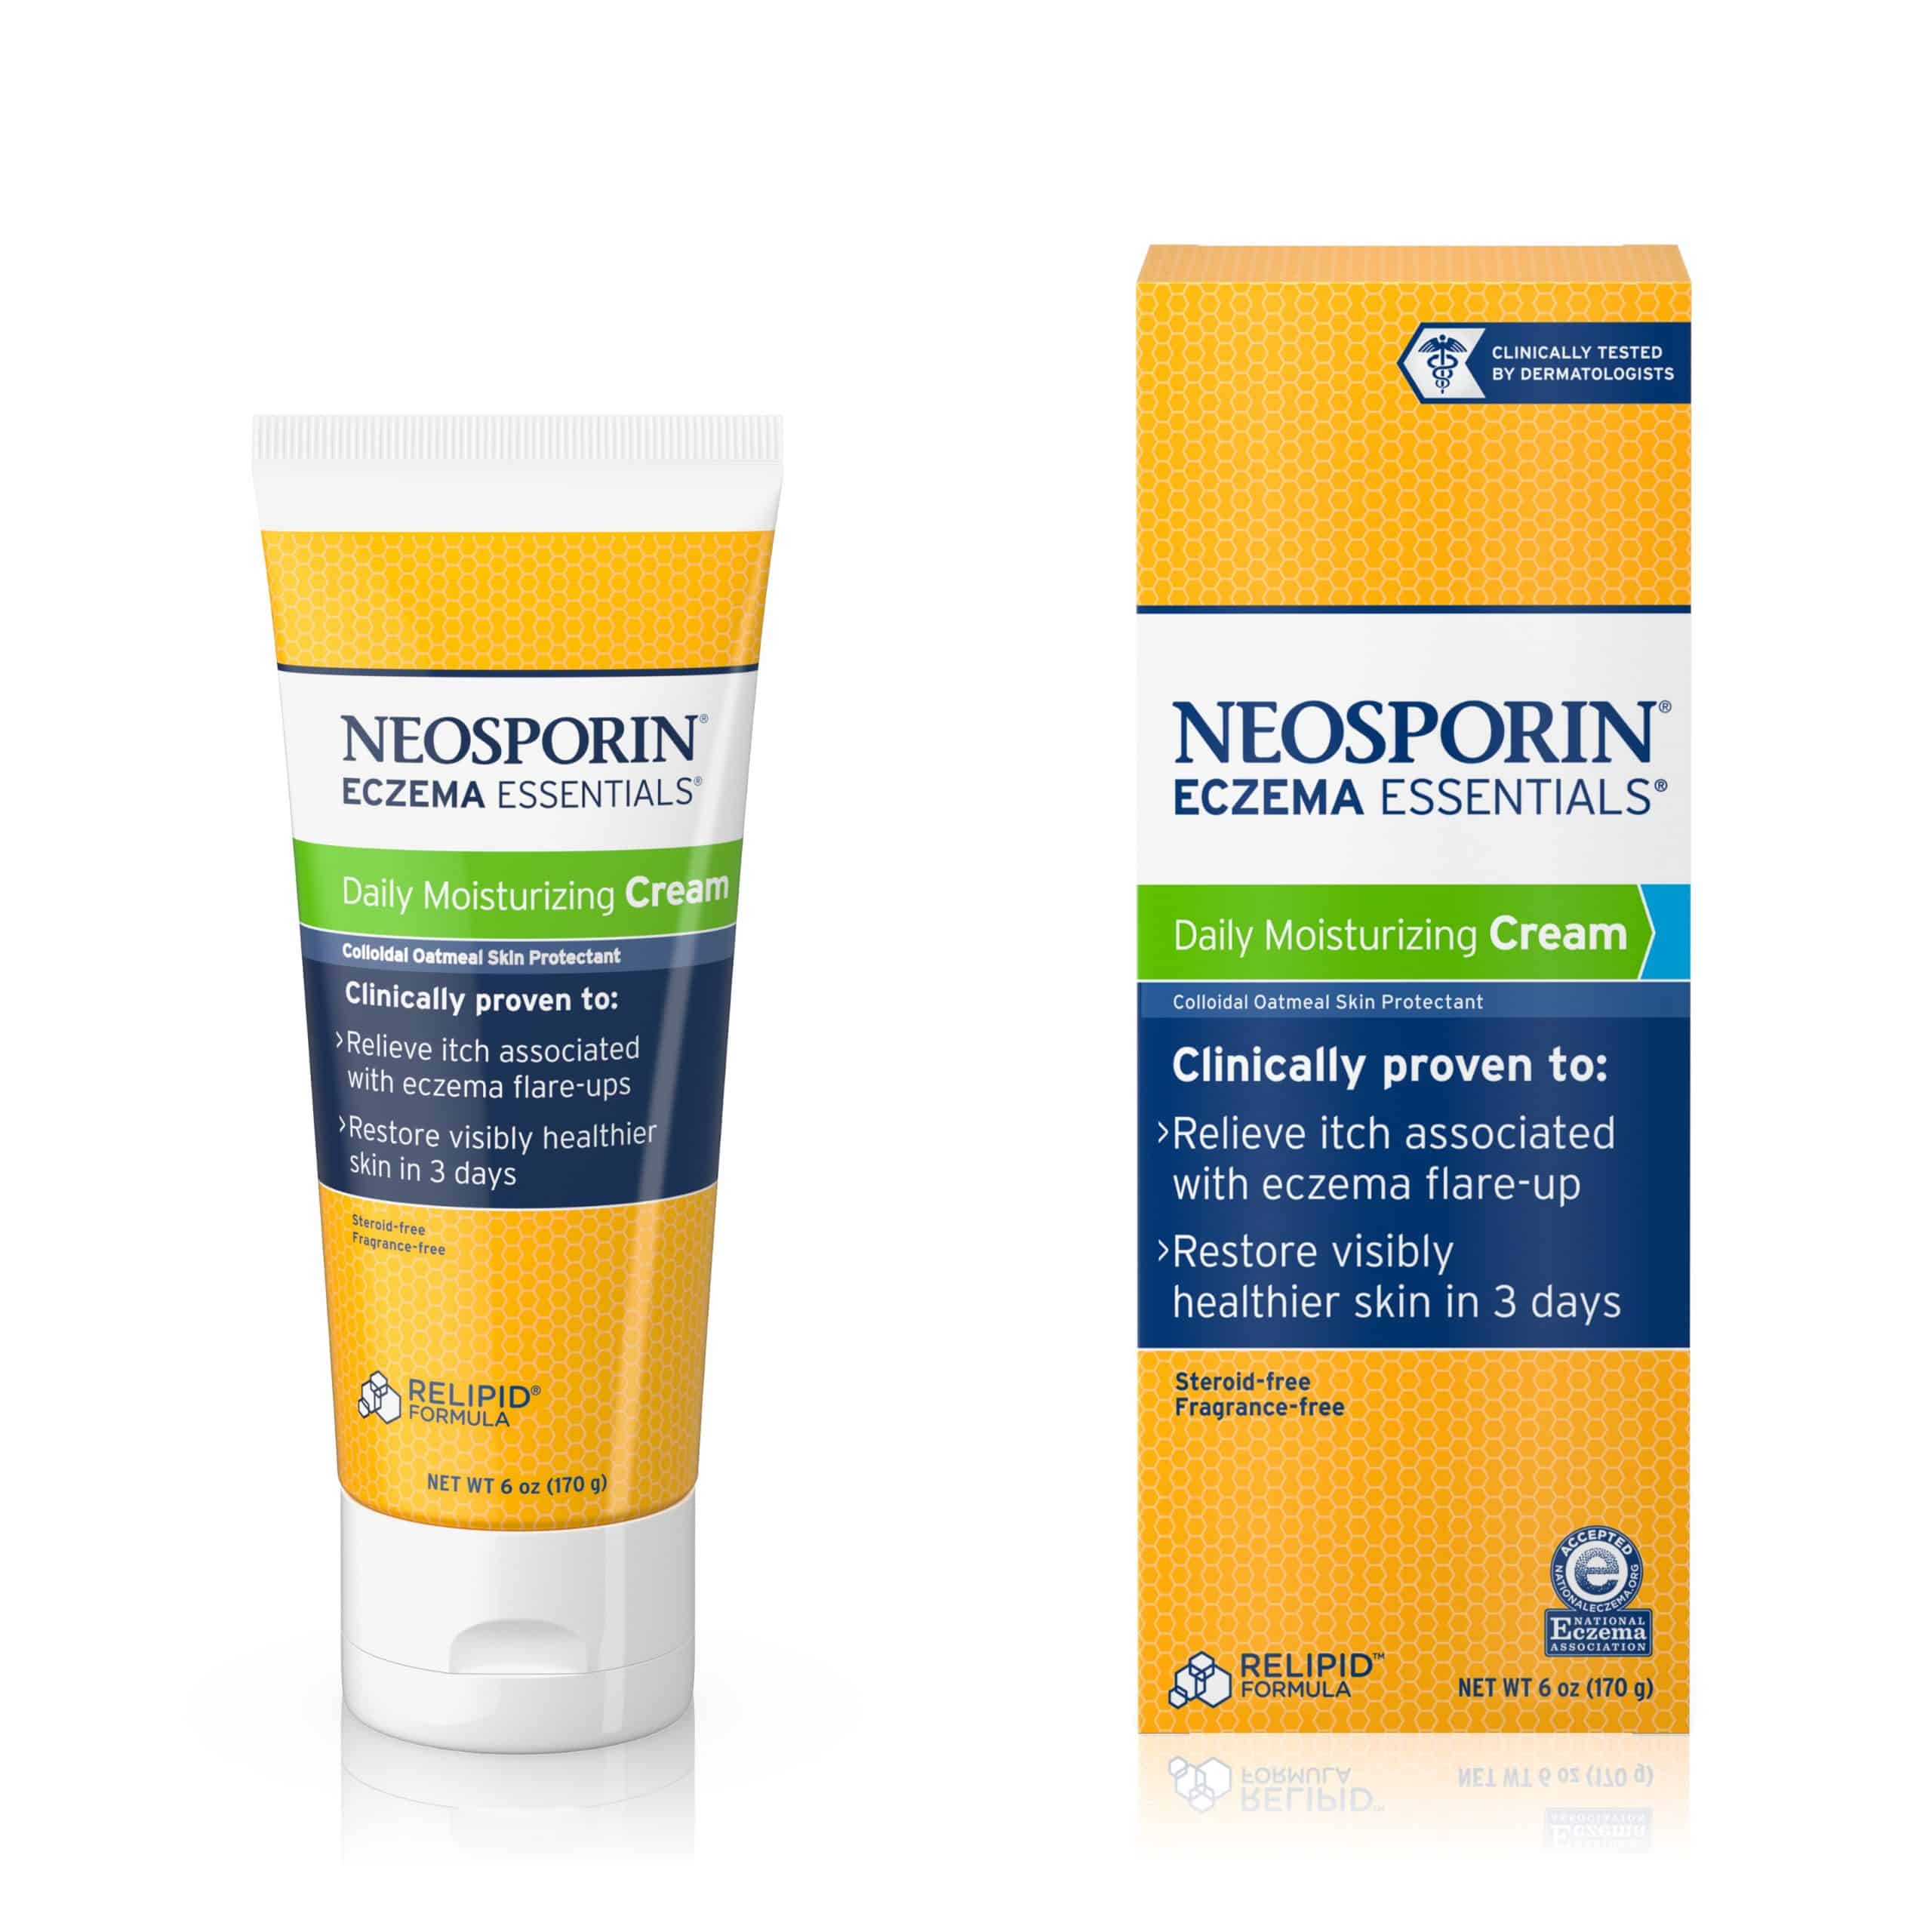 Neosporin Eczema Essentials Daily Moisturizing Cream, 6 Oz